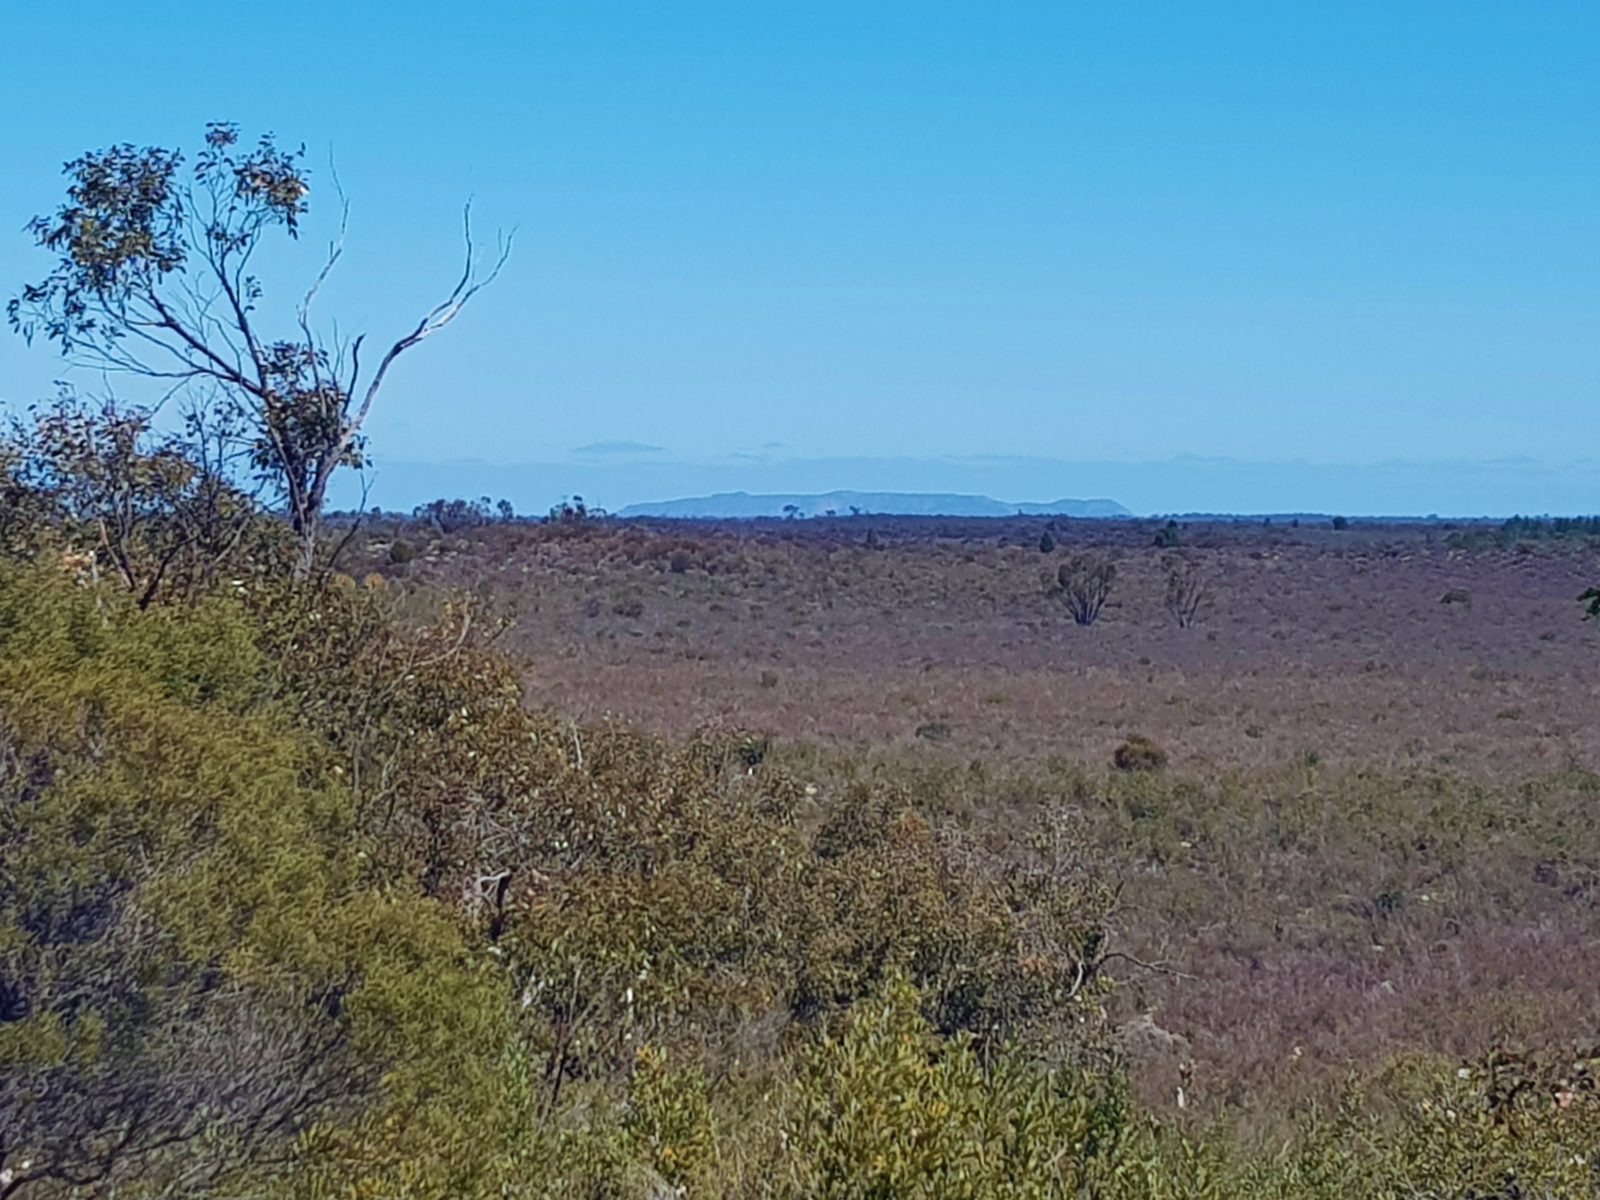 View from Pomponderoo Lookout across Little Desert NP towards Mt Arapiles.